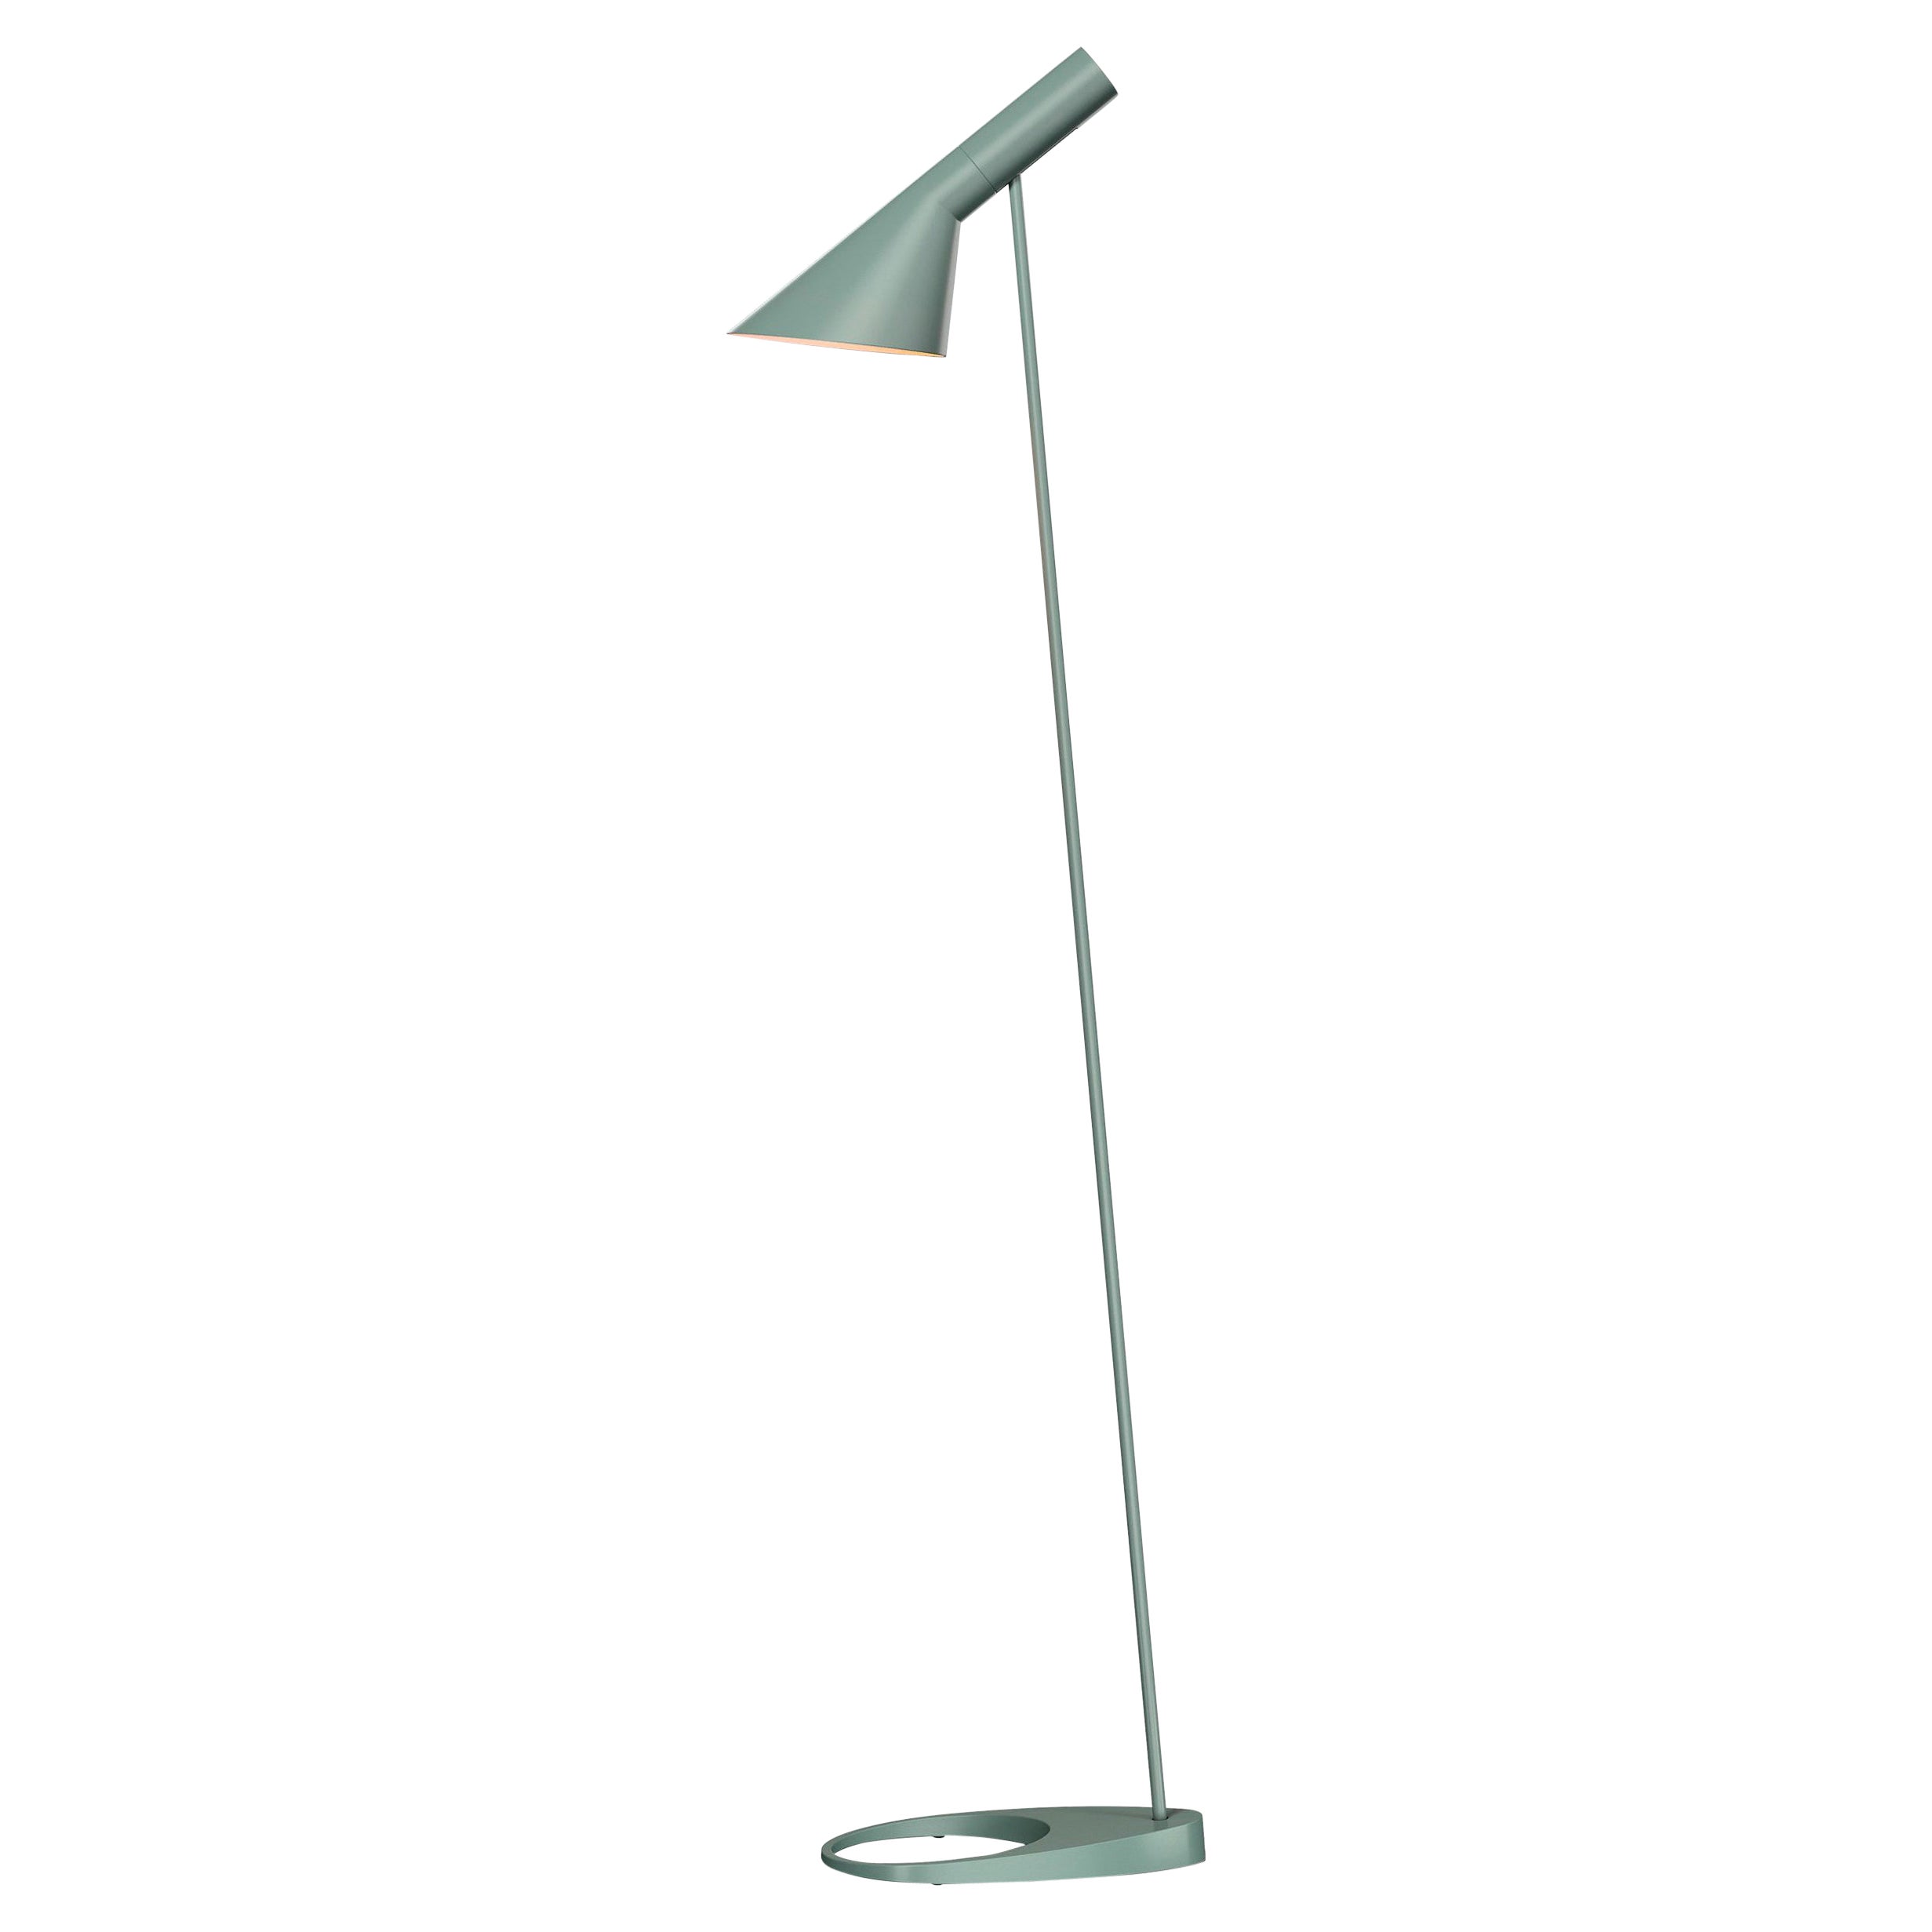 Arne Jacobsen AJ Floor Lamp in Pale Petroleum for Louis Poulsen For Sale